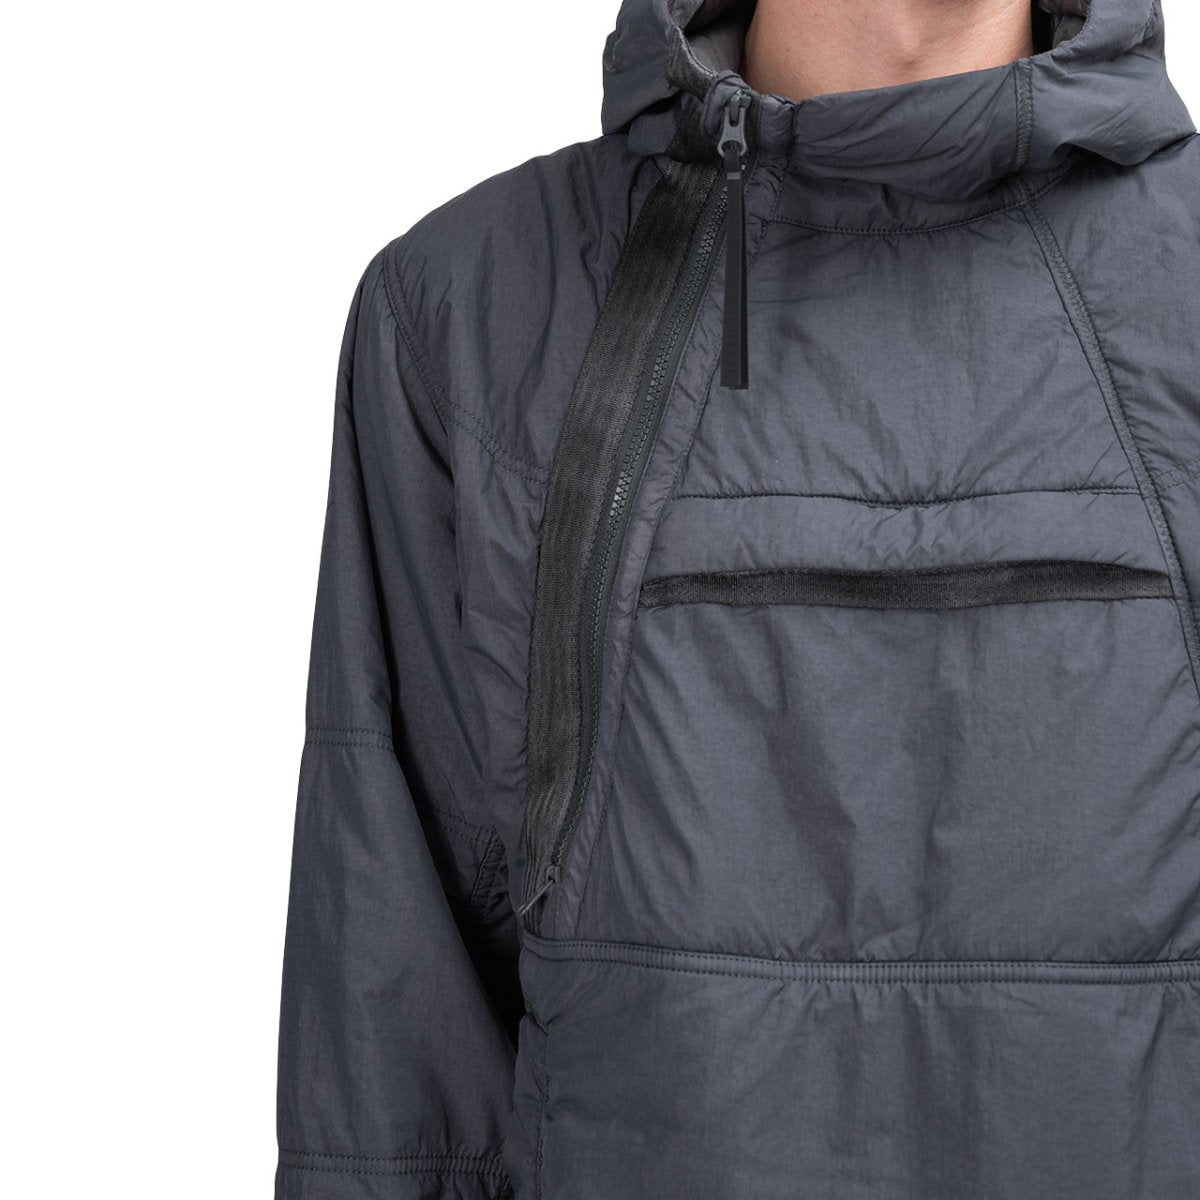 Nike Tech Pack Fill Jacket (Anthrazit / Schwarz)  - Allike Store